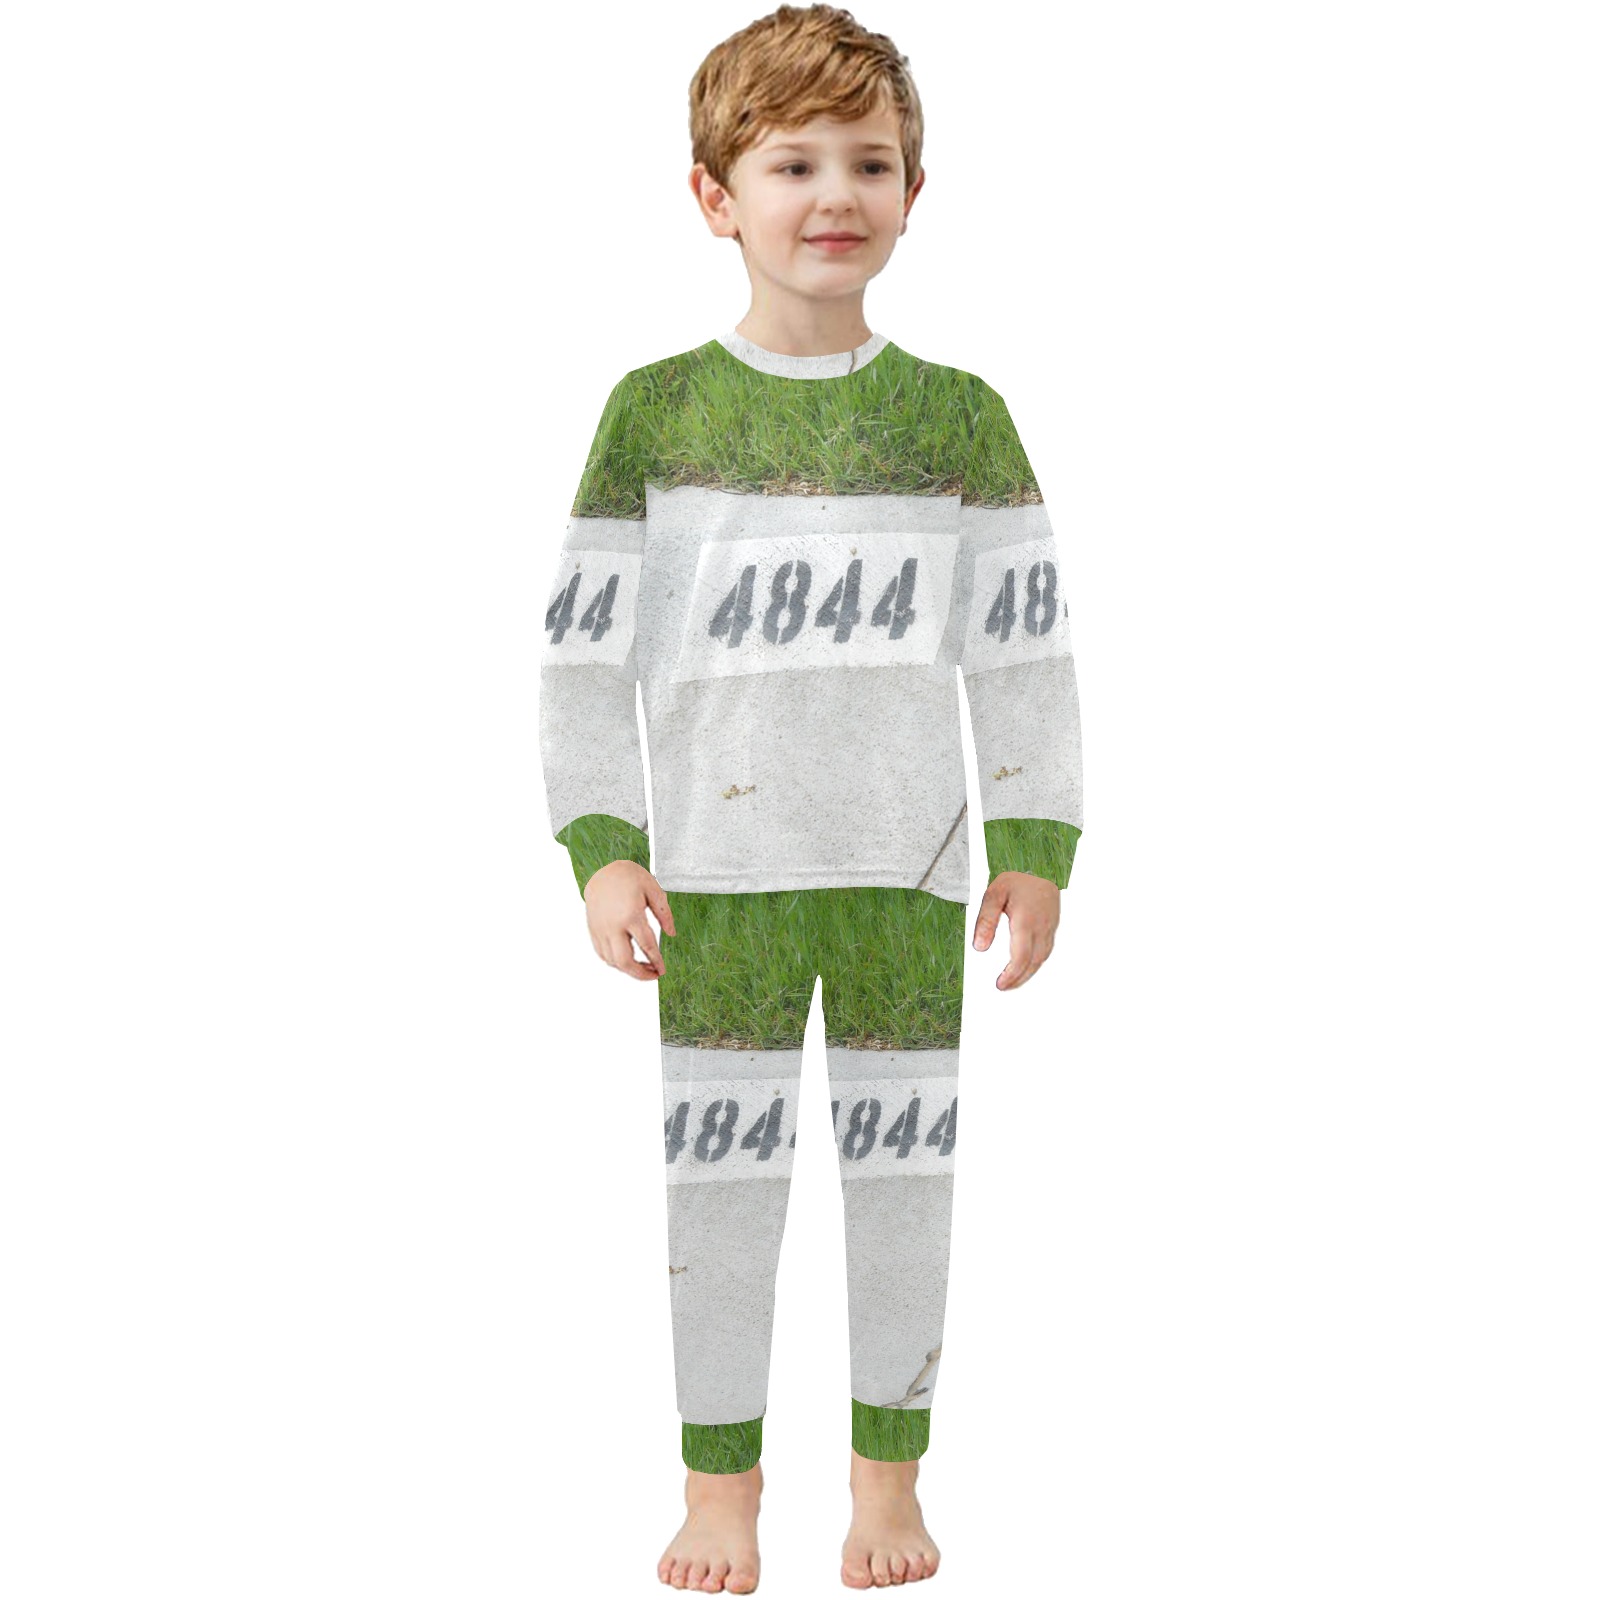 Street Number 4844 Little Boys' Crew Neck Long Pajama Set